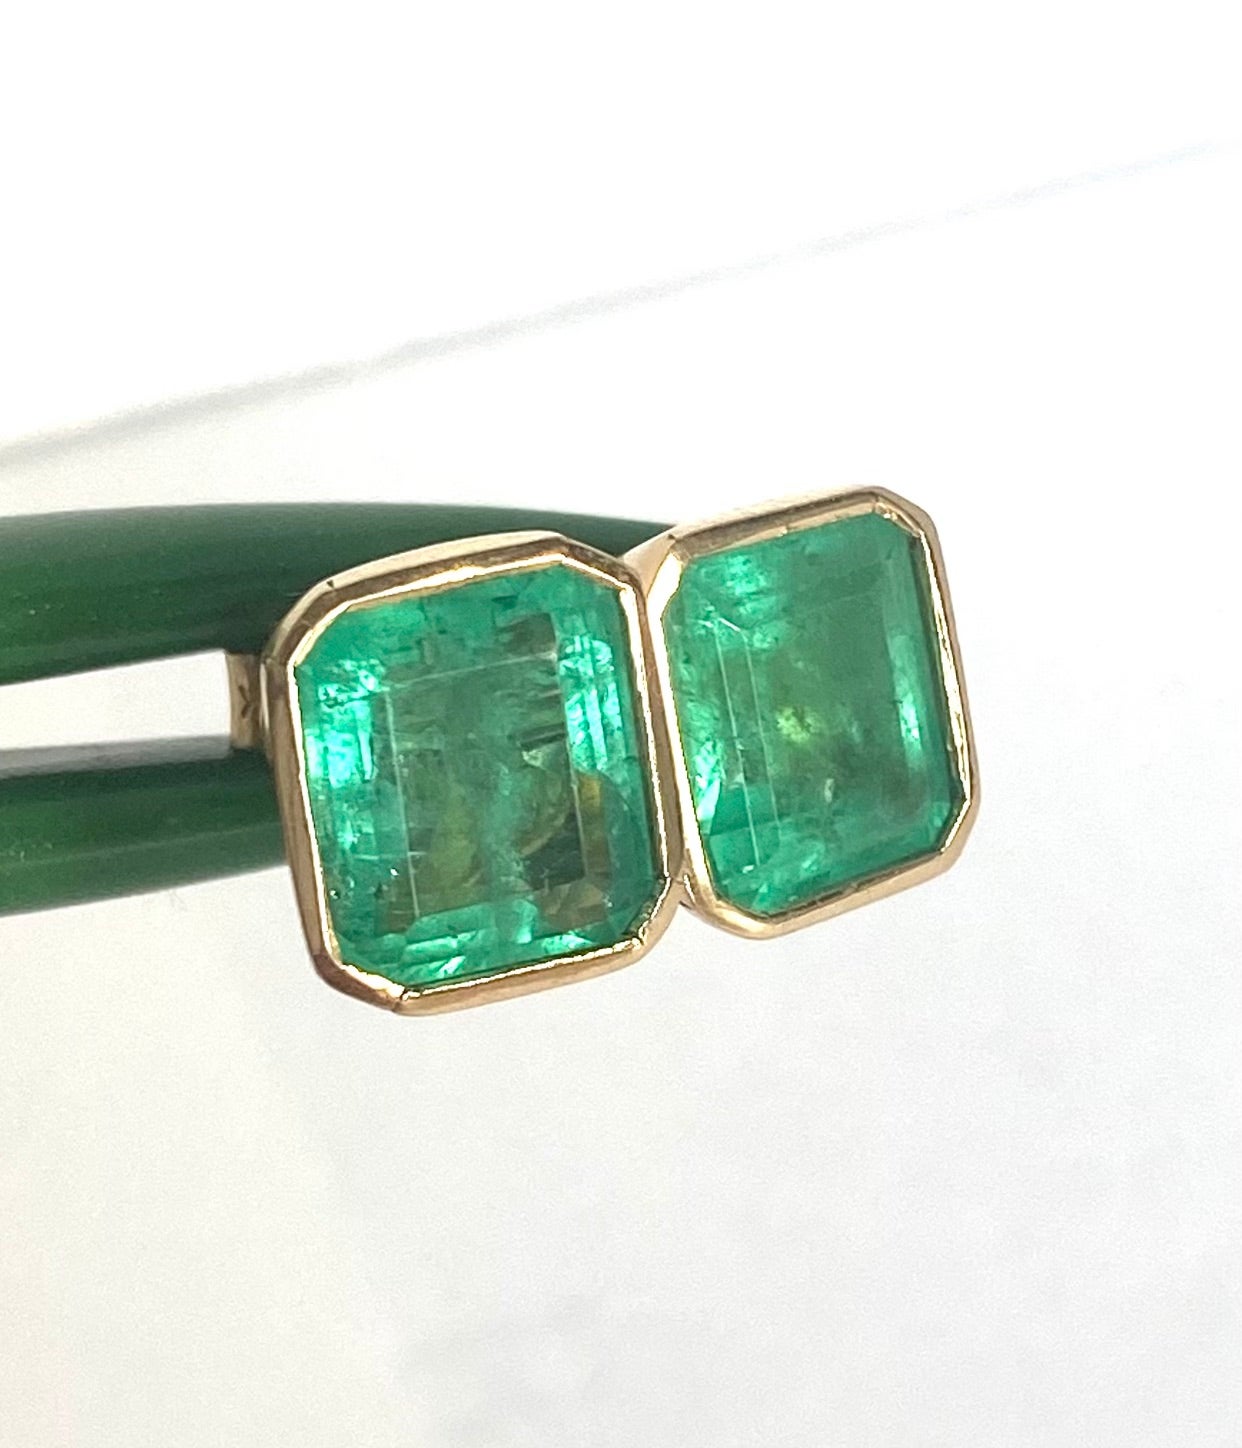 Timeless Stud Earrings Natural Medium Green Colombian Emerald Emerald Cut Total Weight 6.20 Carats

Primary Stones: 100% Natural Colombian Emeralds
Shape or Cut: Emerald Cut
Average Color/Clarity: Medium Green/ Clarity, VS
Total Weight Emeralds: